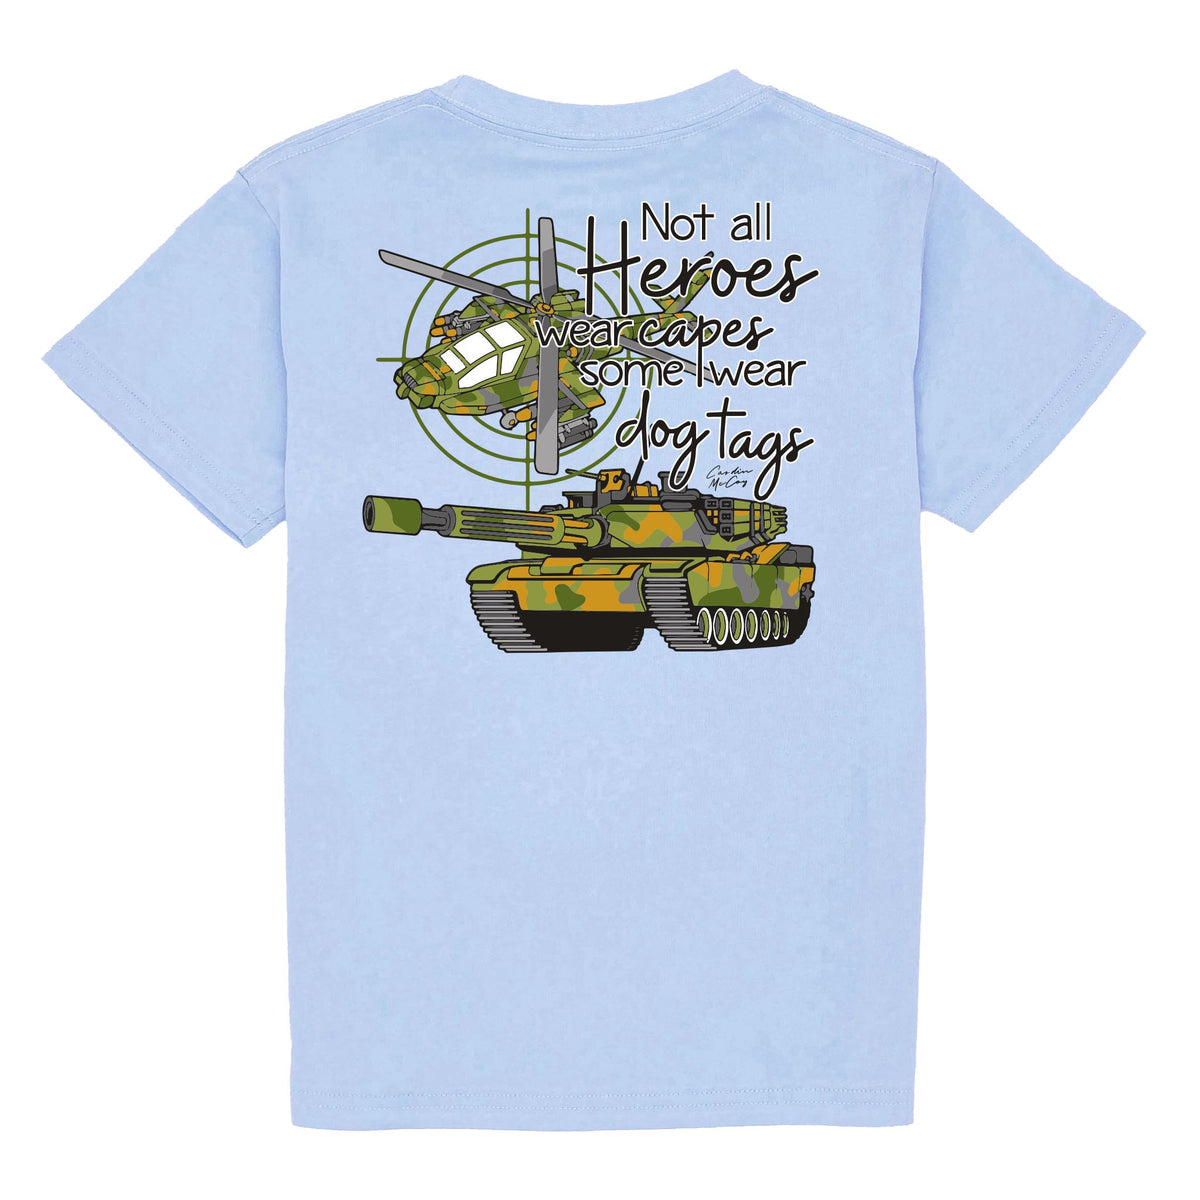 Kids' Not All Heroes Short Sleeve Pocket Tee Short Sleeve T-Shirt Cardin McCoy Light Blue XXS (2/3) 